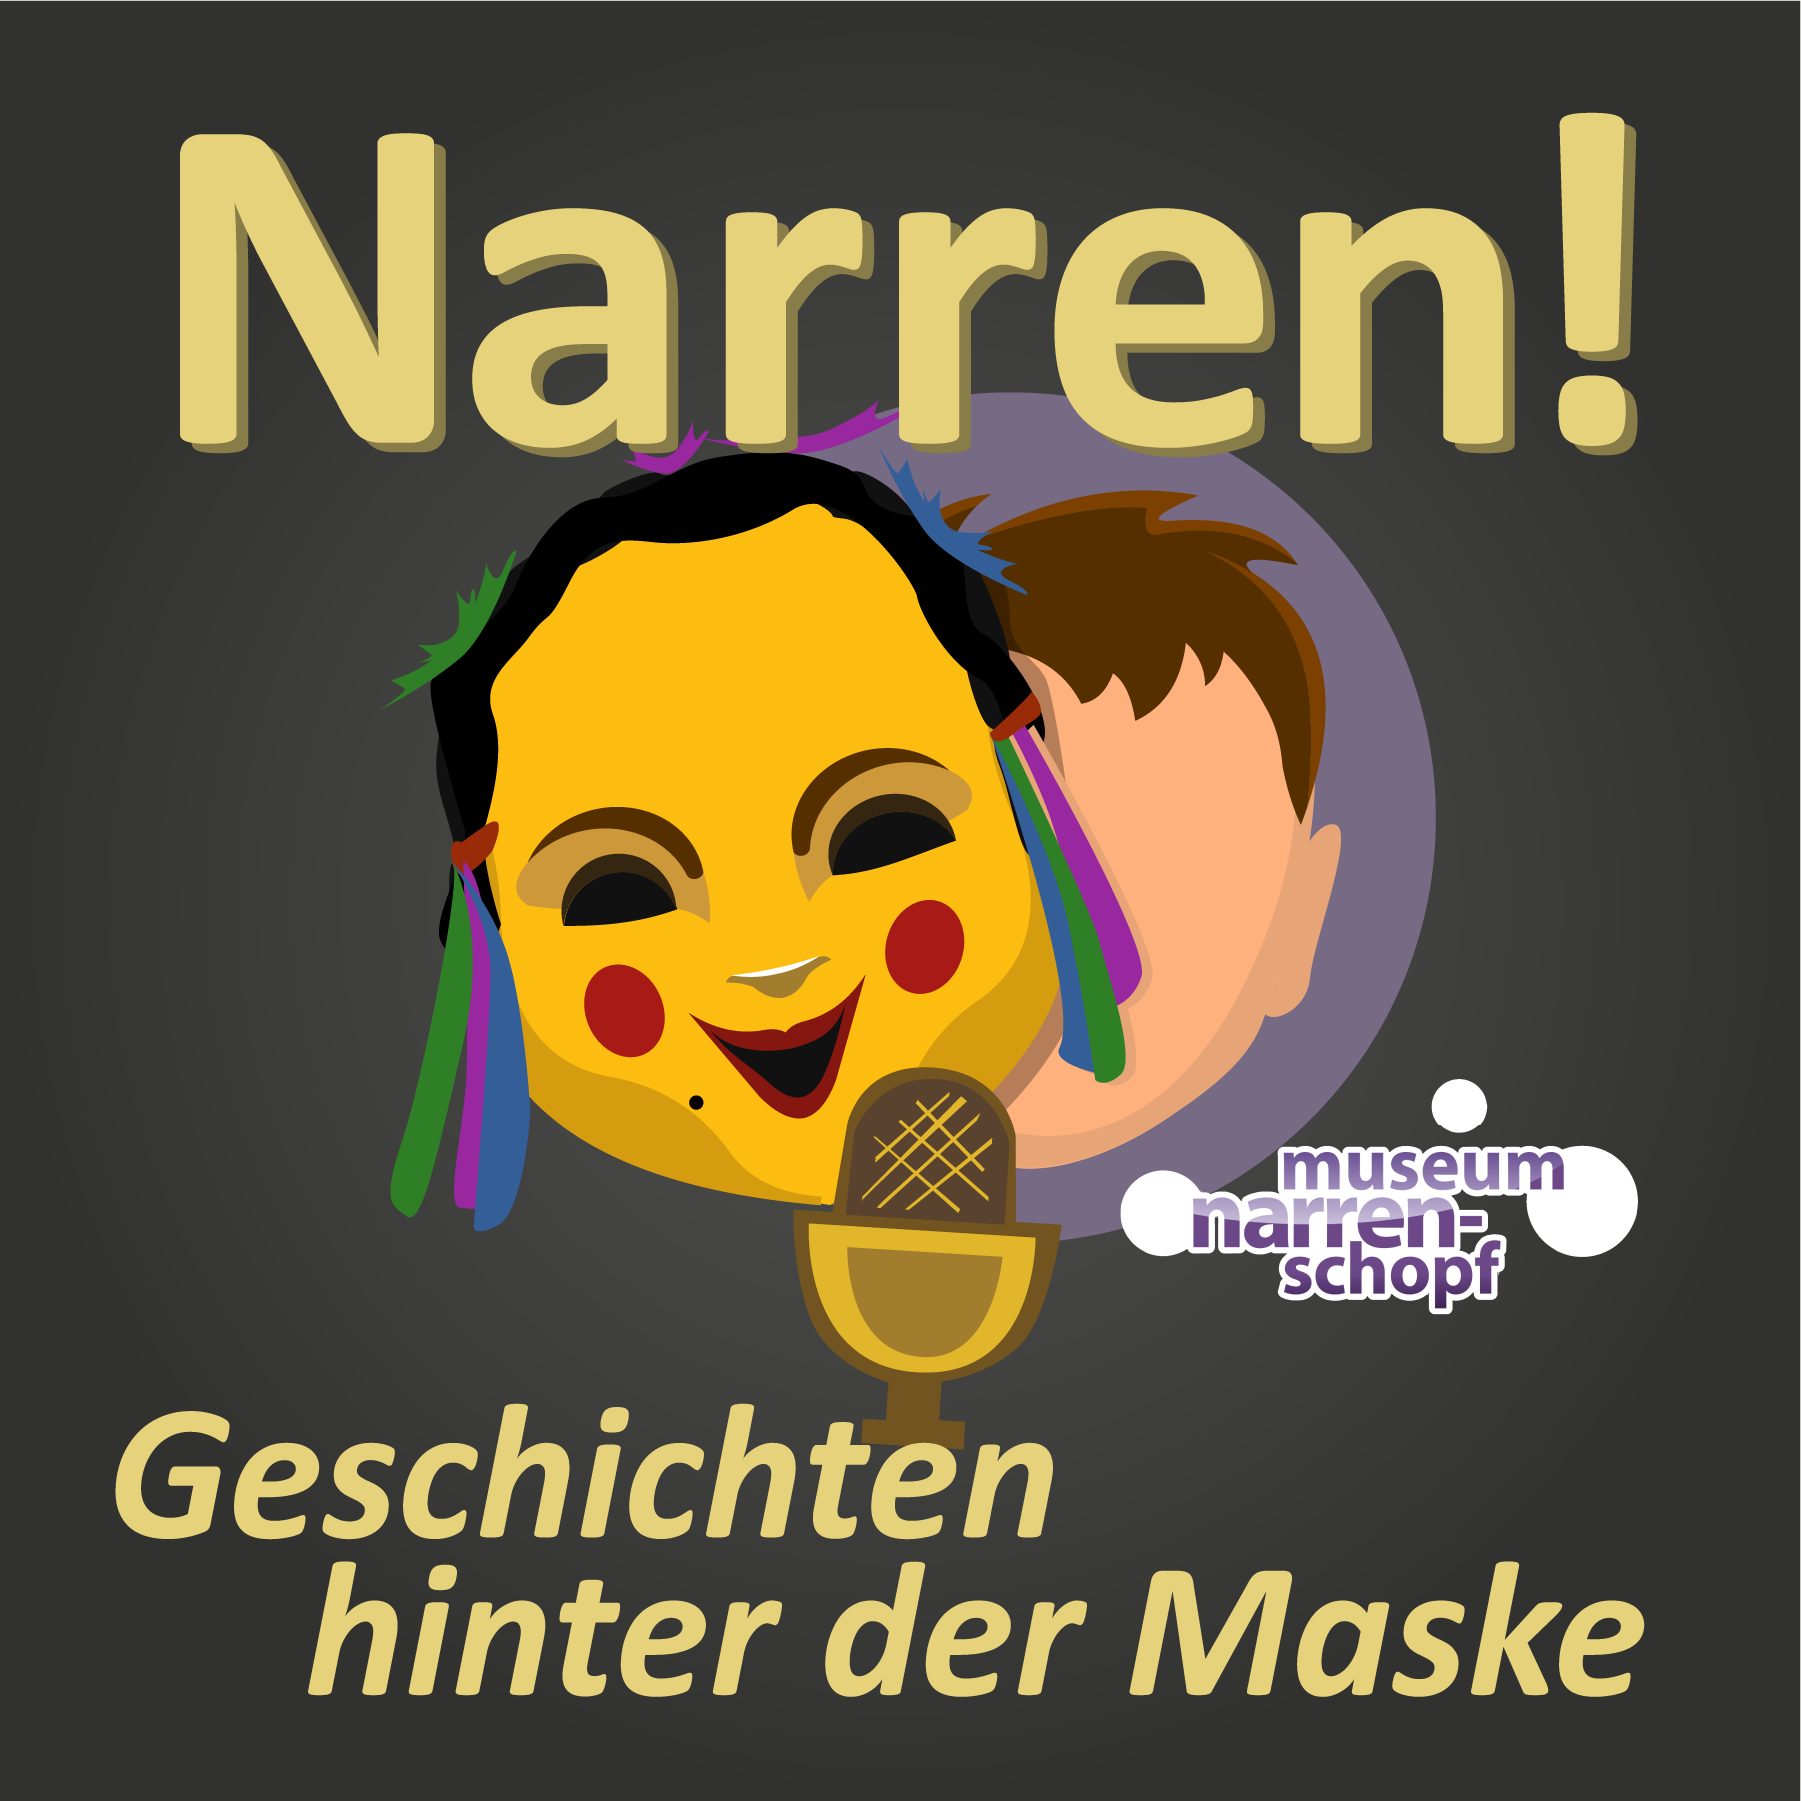 Podcast: Narren! Geschichten hinter der Maske